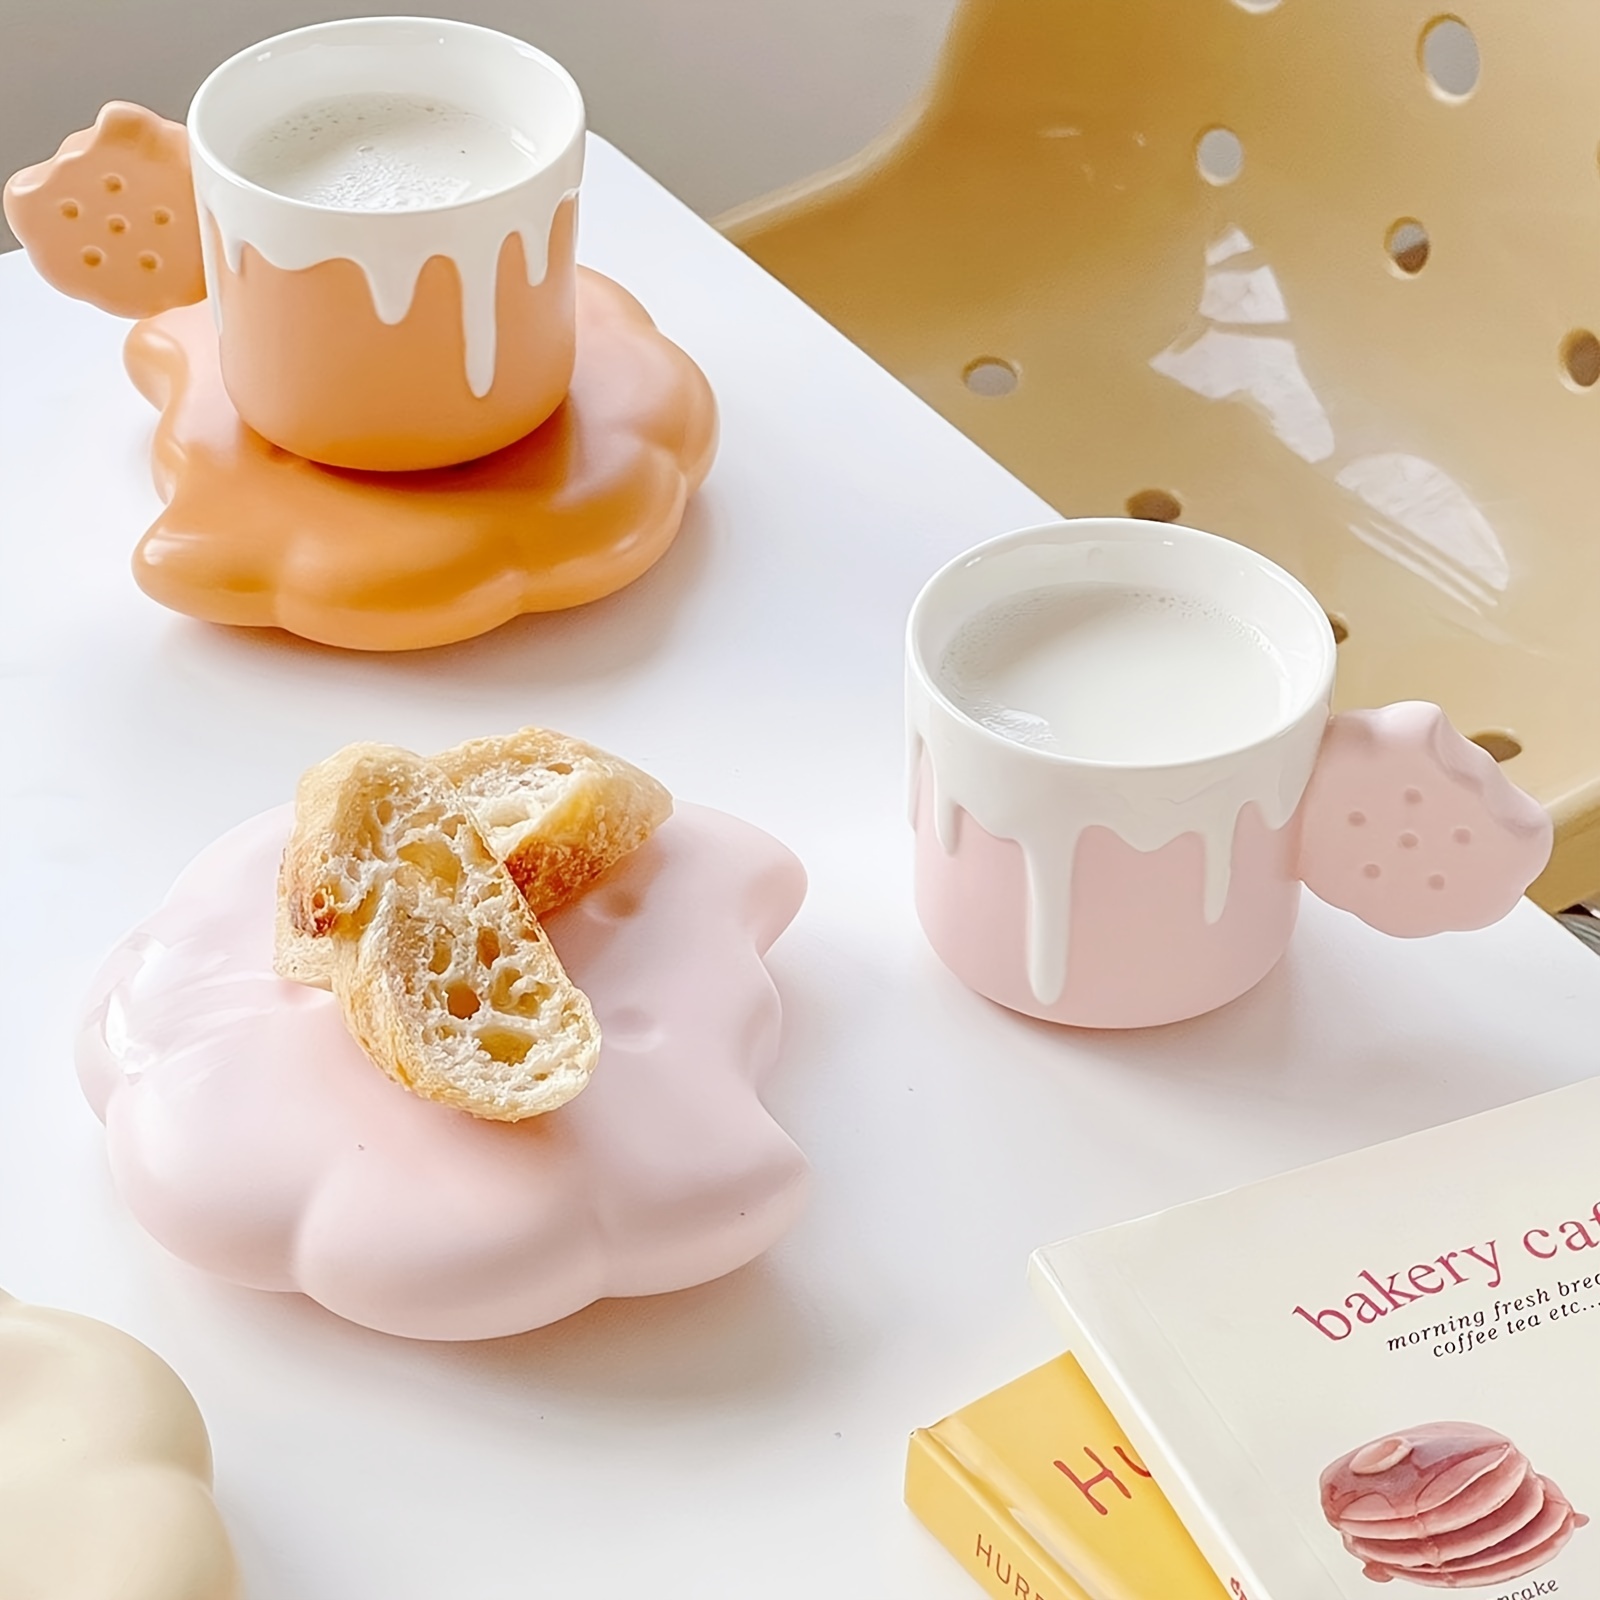 Hot Sale Ceramic Gifting Cups Saucers Spoons Cute Fruit Tea Coffee Set -  China Coffee & Tea Set and Porcelain Tea Set price